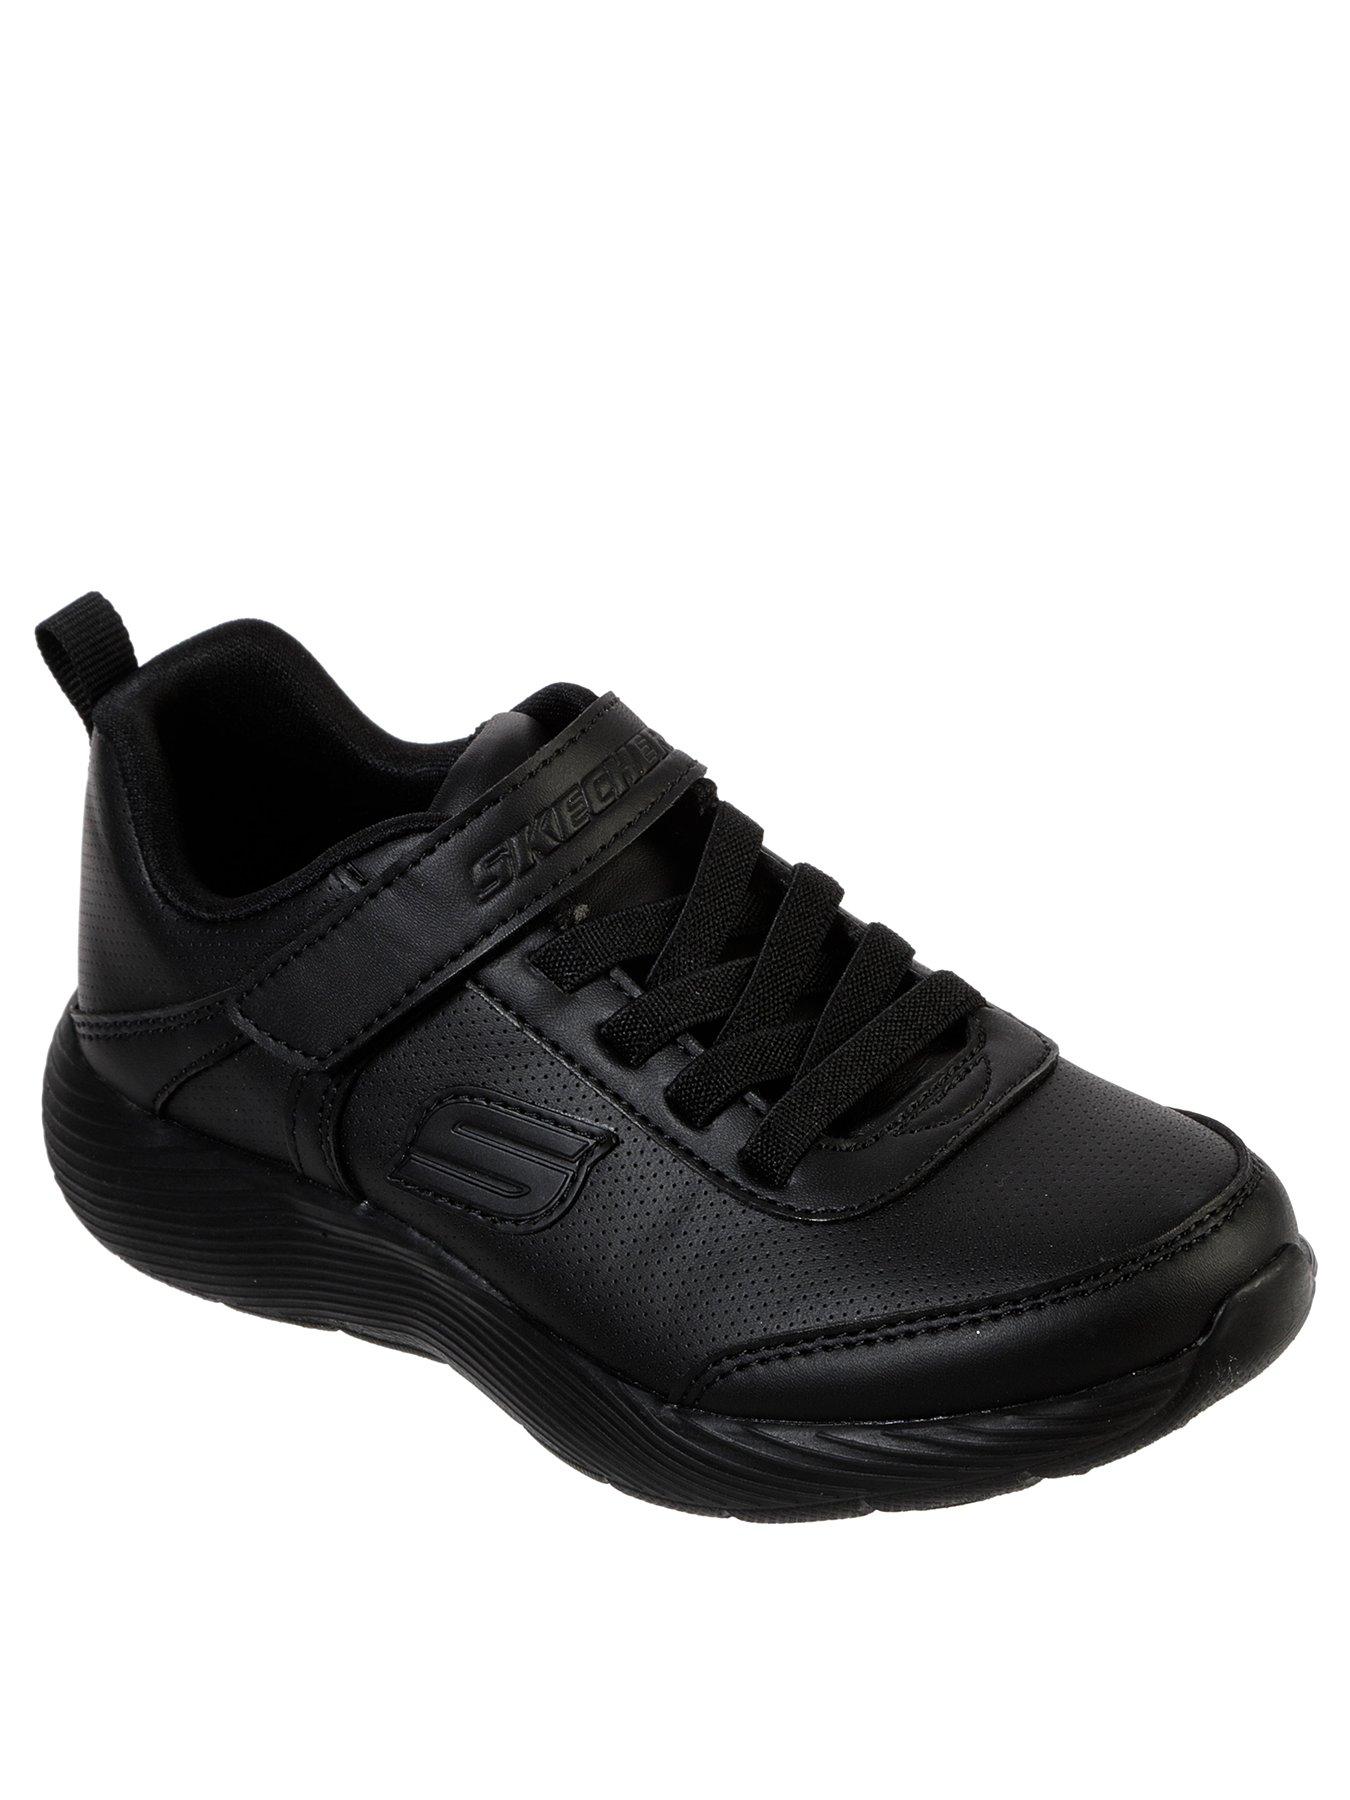 Shoes & boots Boys Dyna-lite Sprint Trainer - Black